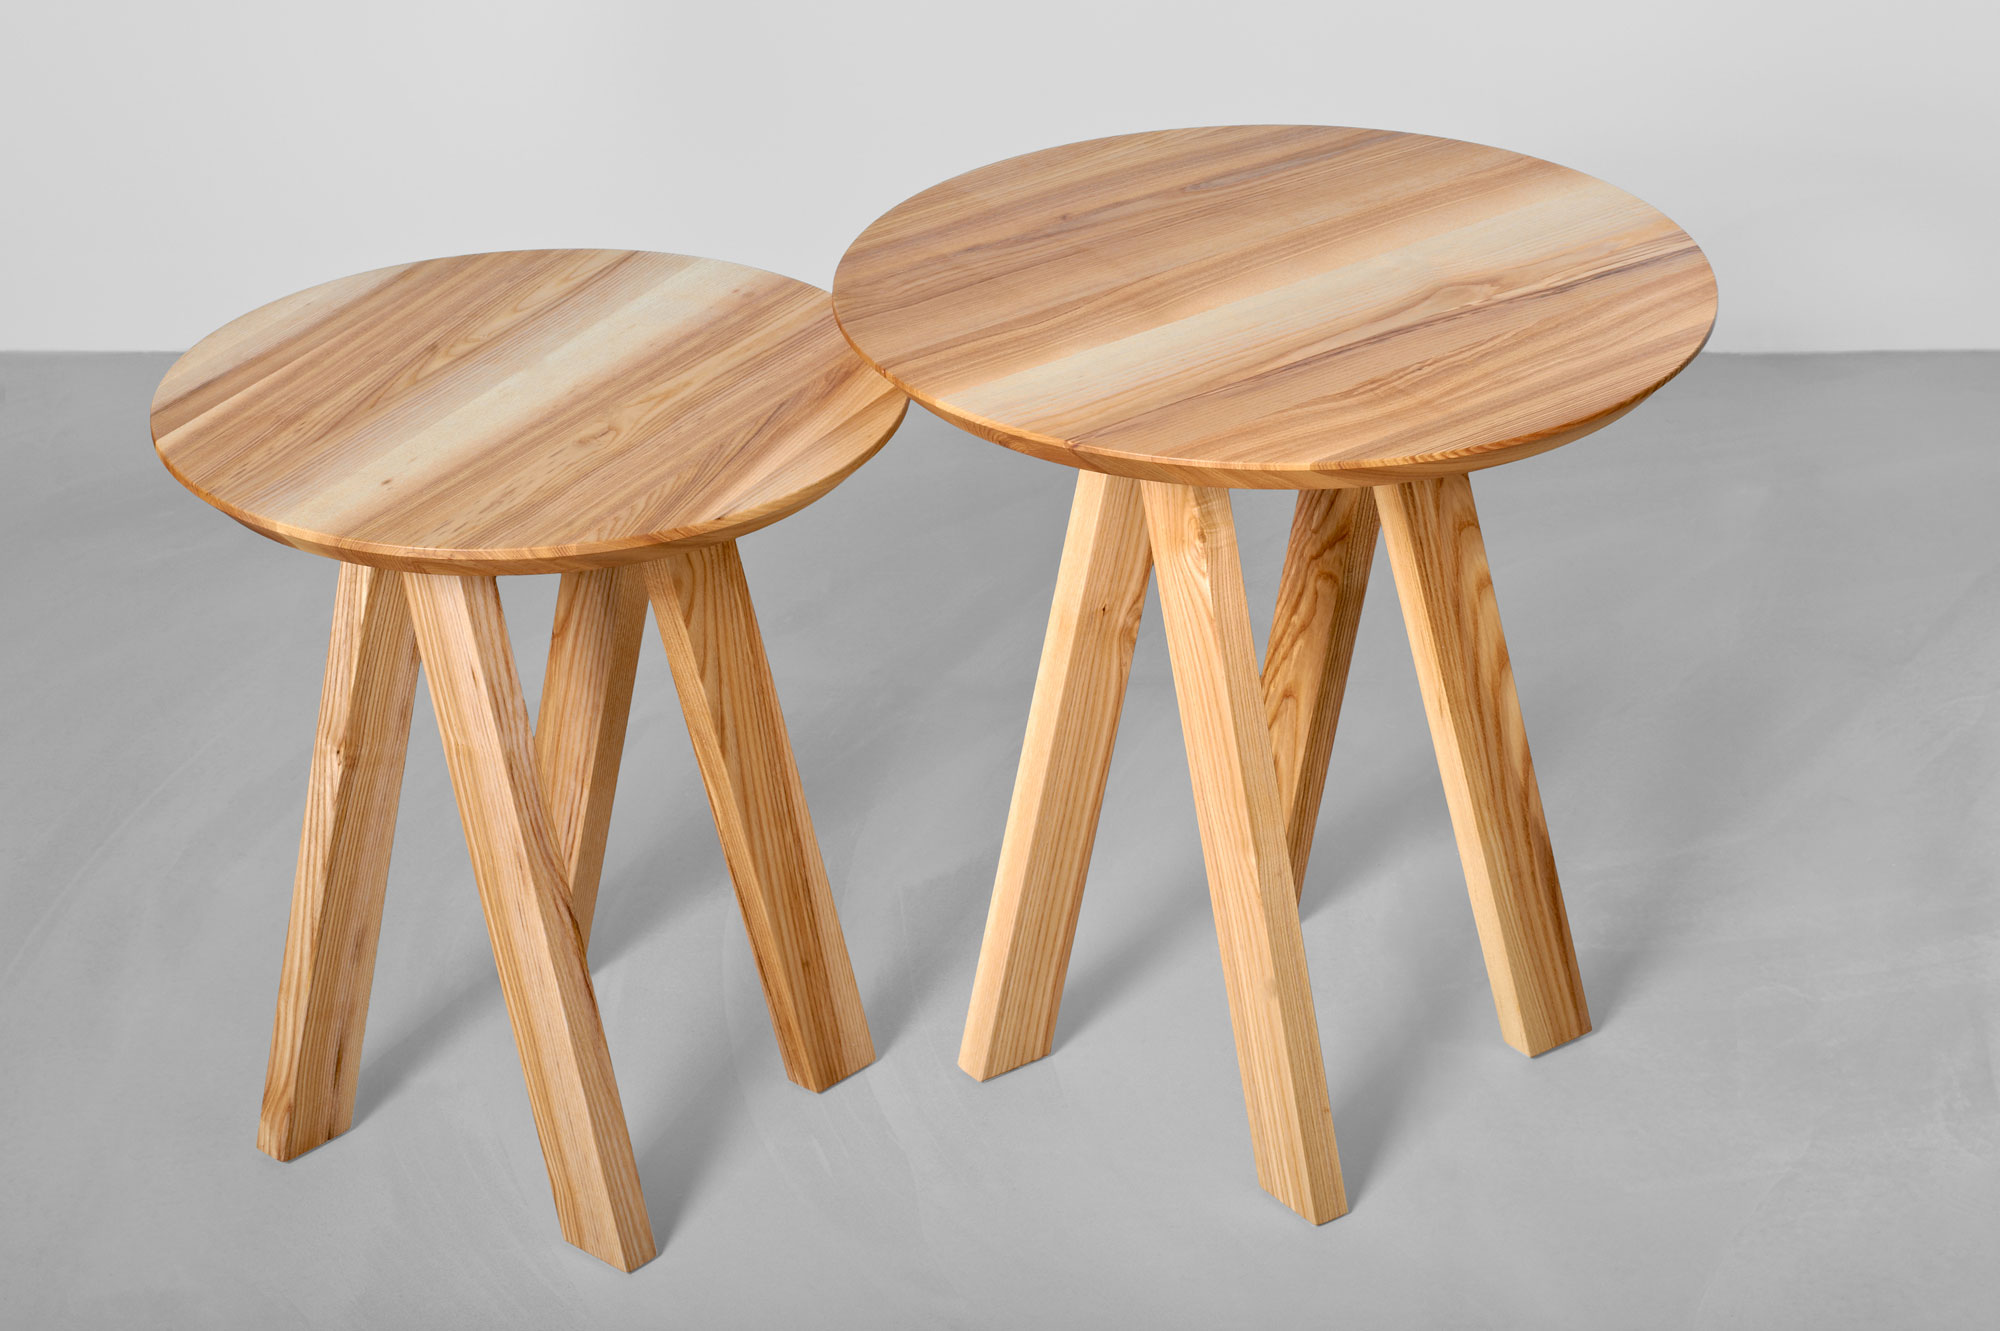 Designer Coffee Table ZIRKEL RG Zirkel4699co custom made in solid wood by vitamin design